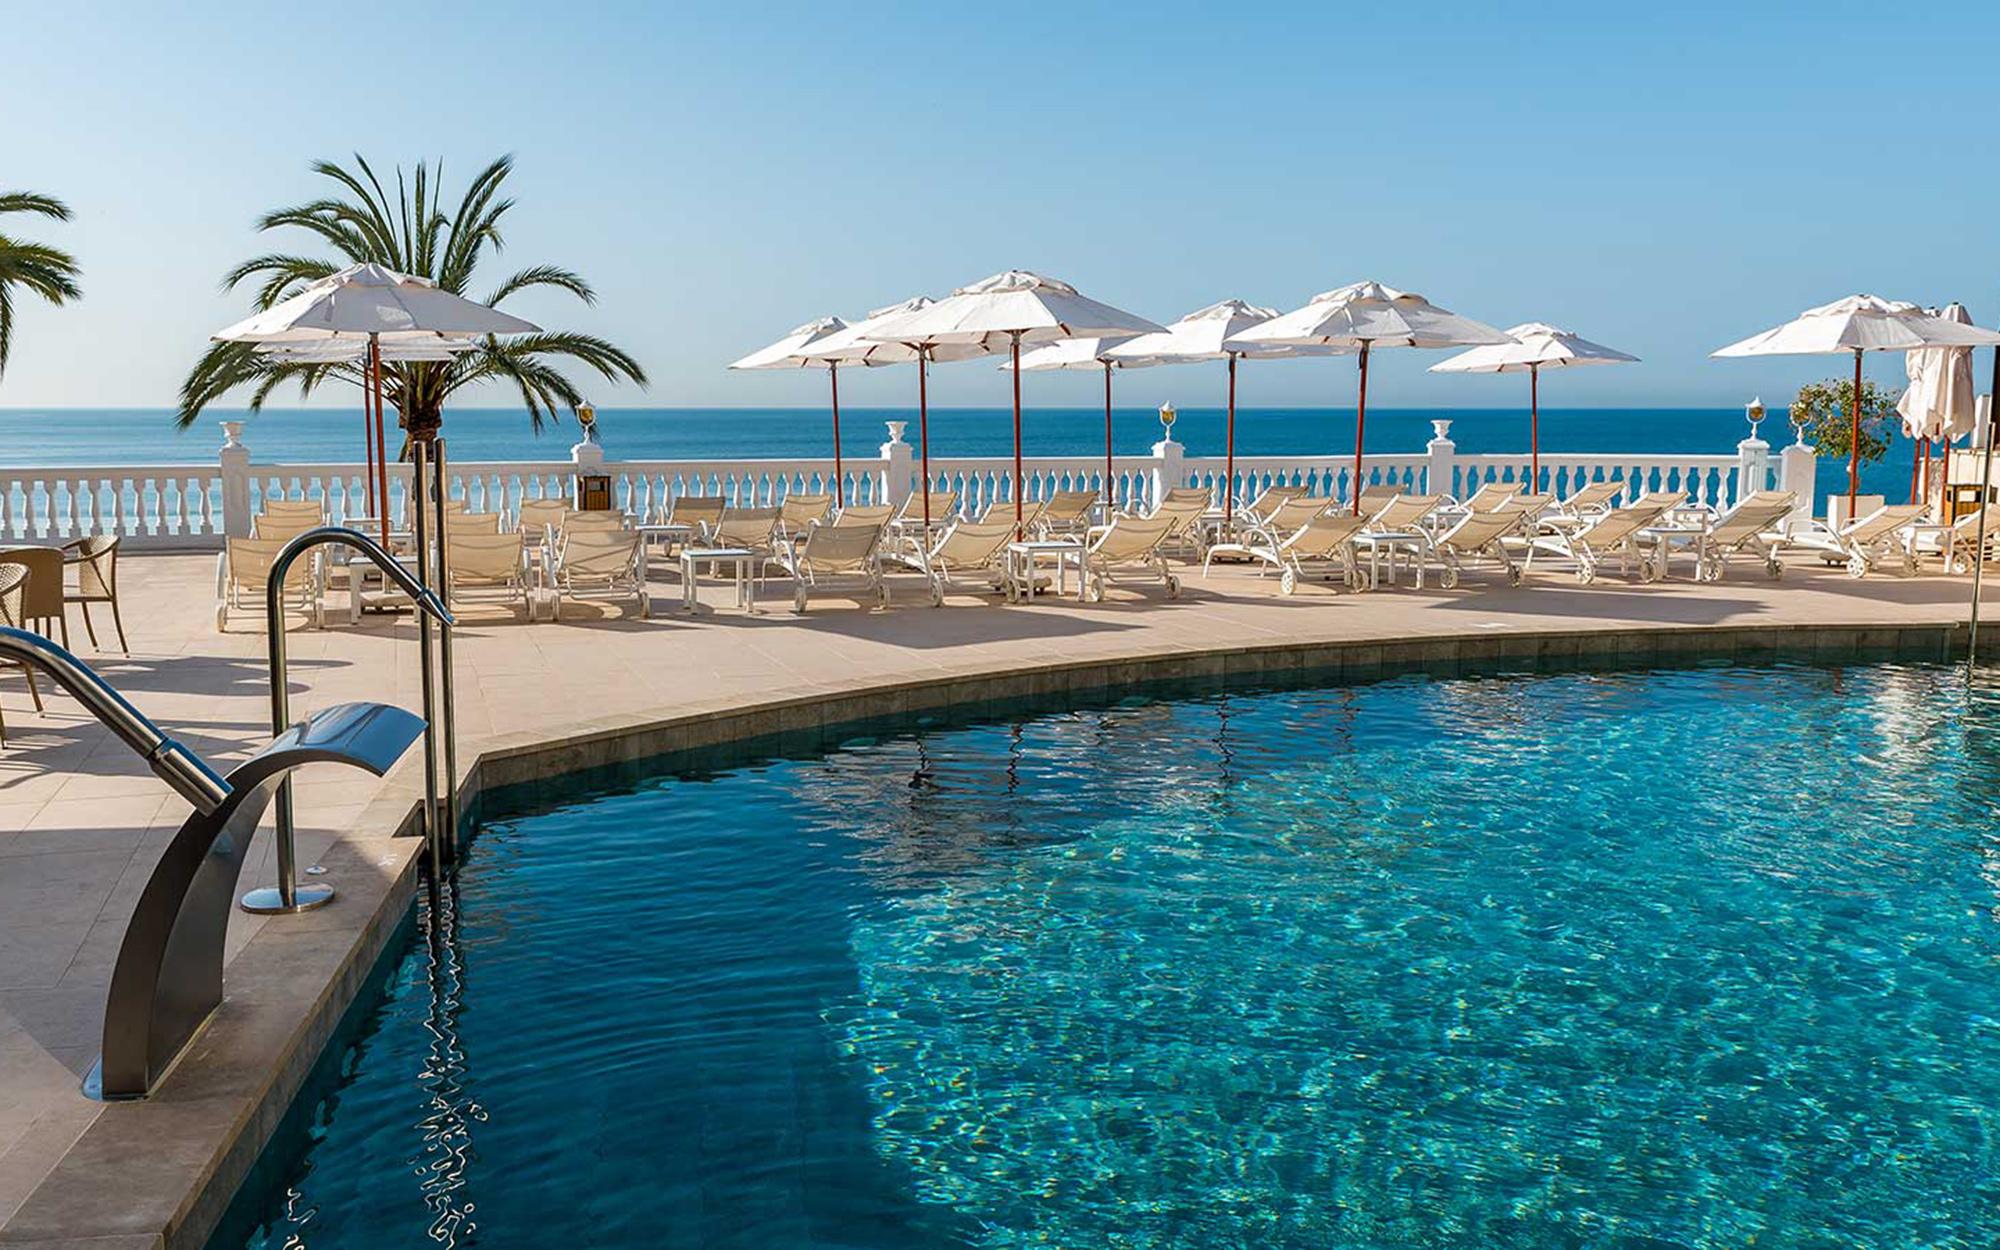 View Nixe Palace Hotel's impressive main pool in sensational Mallorca.